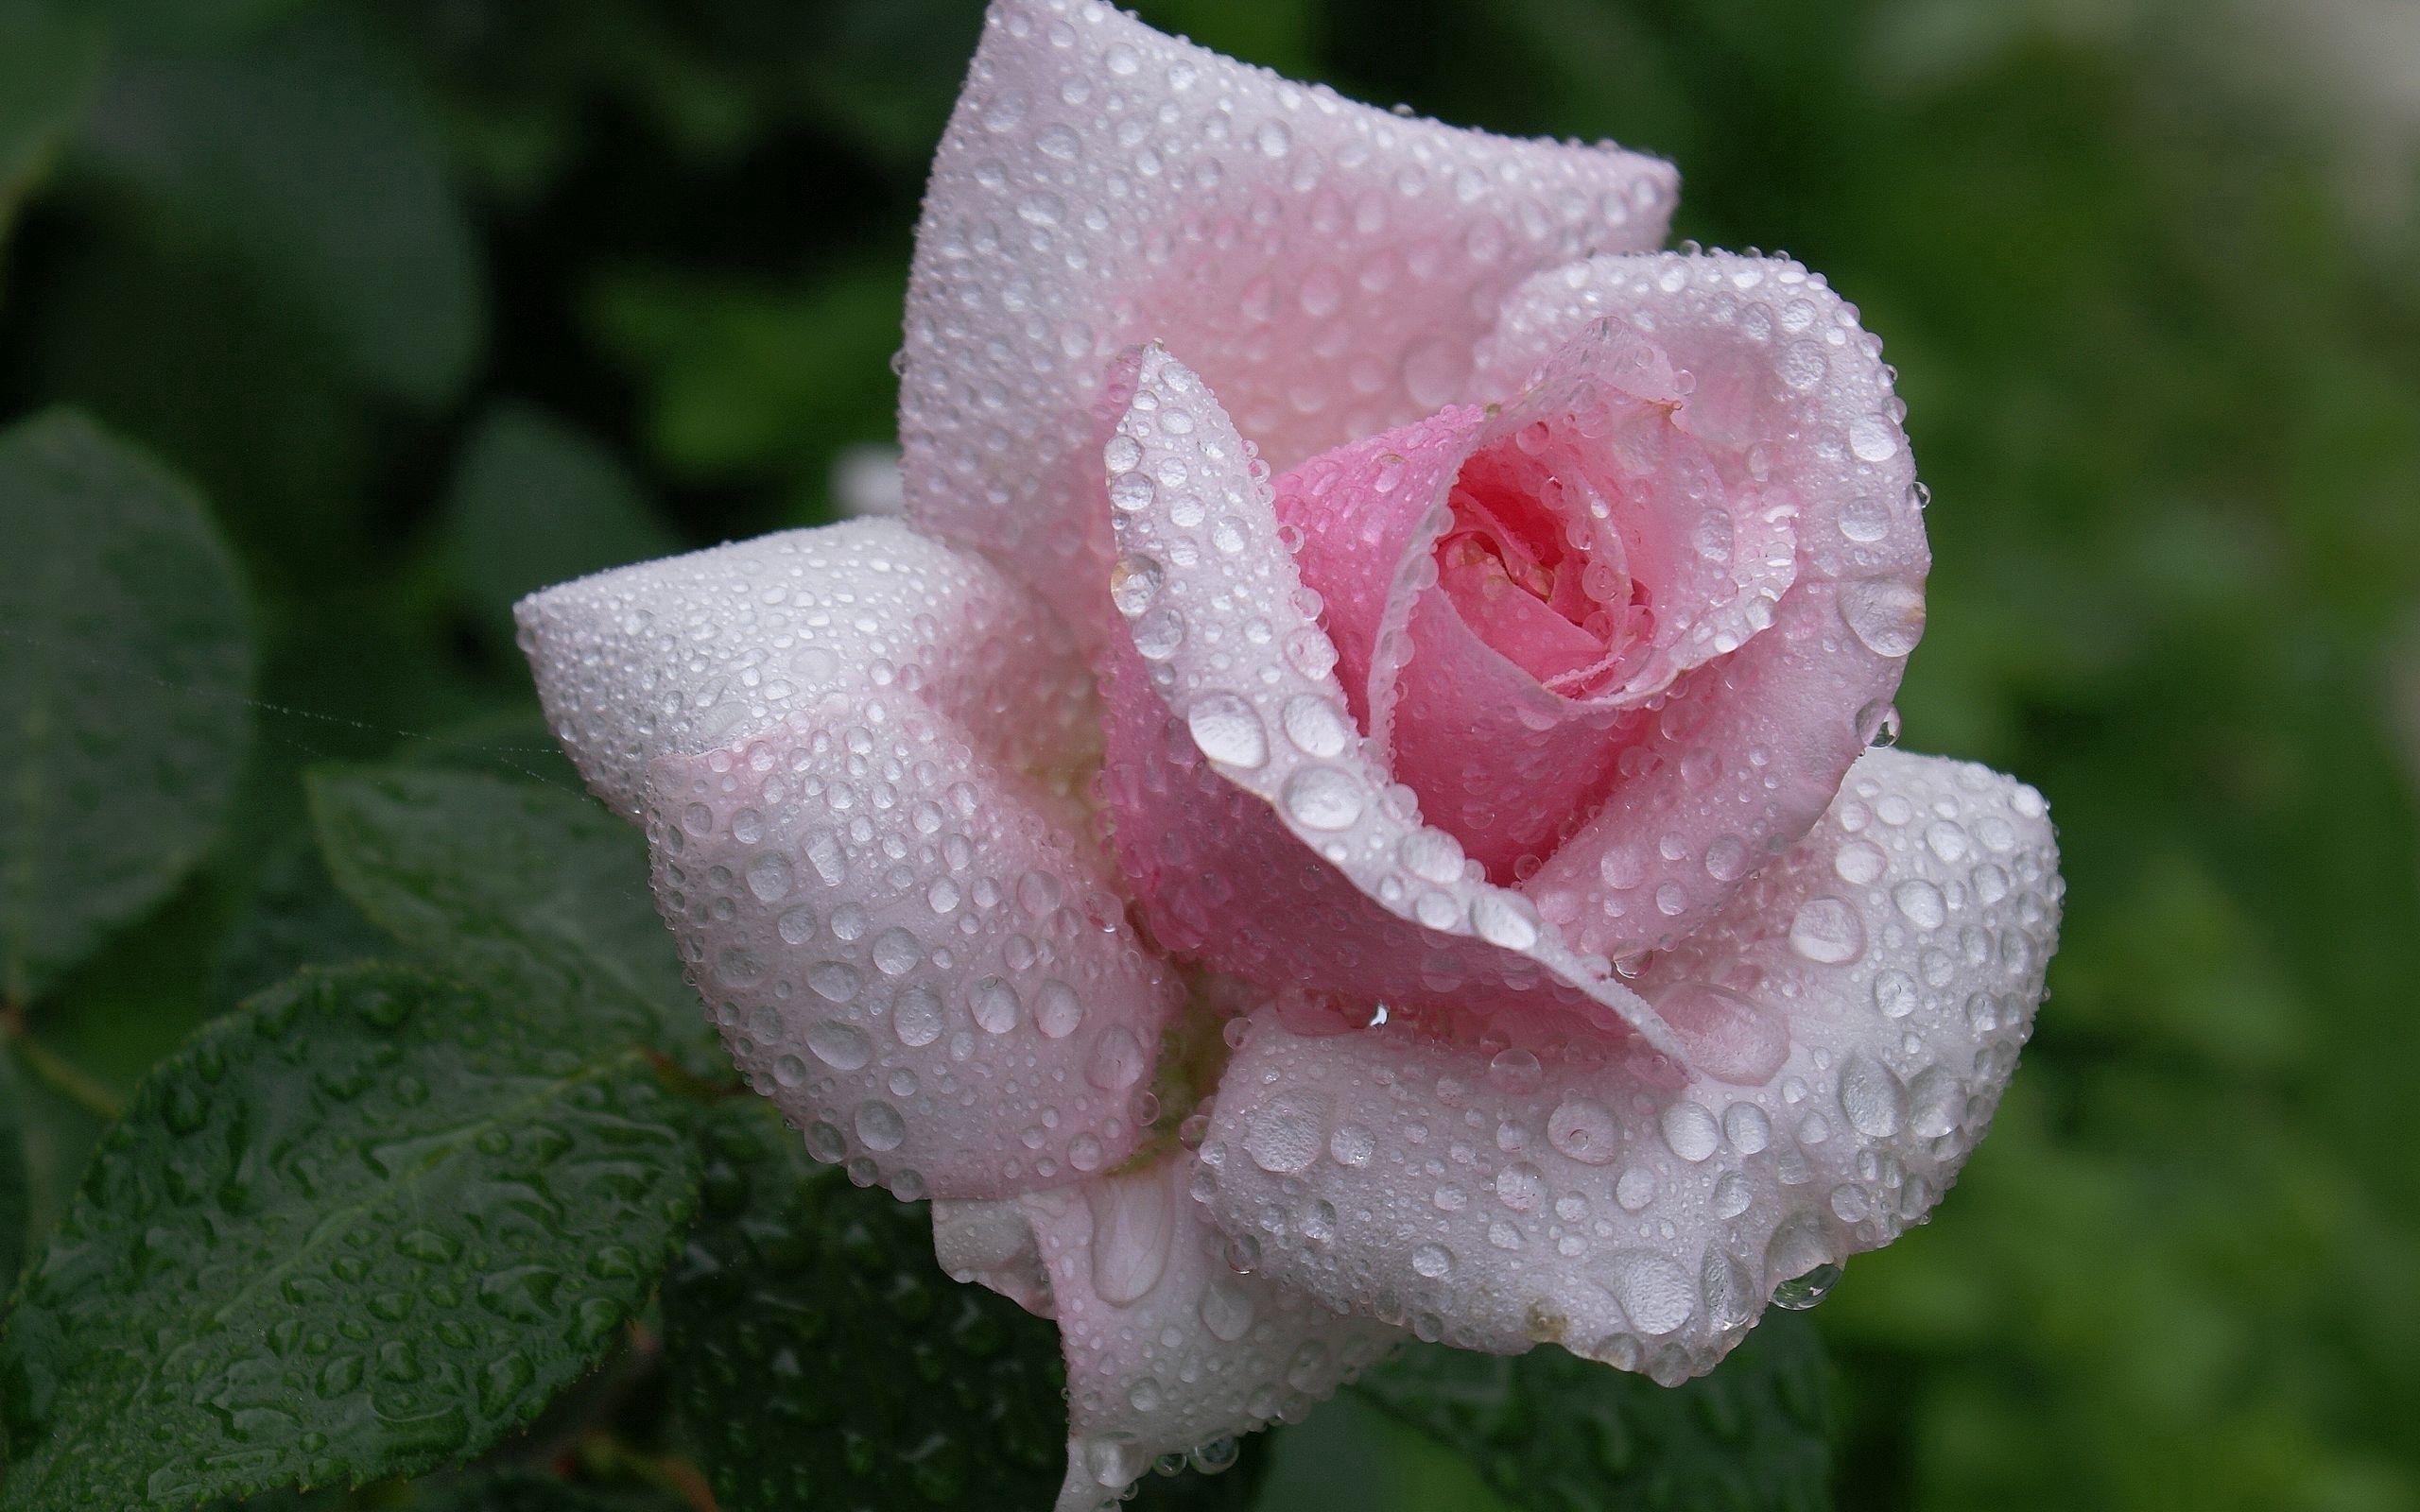 flowers, leaves, rain, drops, flower, rose flower, rose, bud, handsomely, it's beautiful